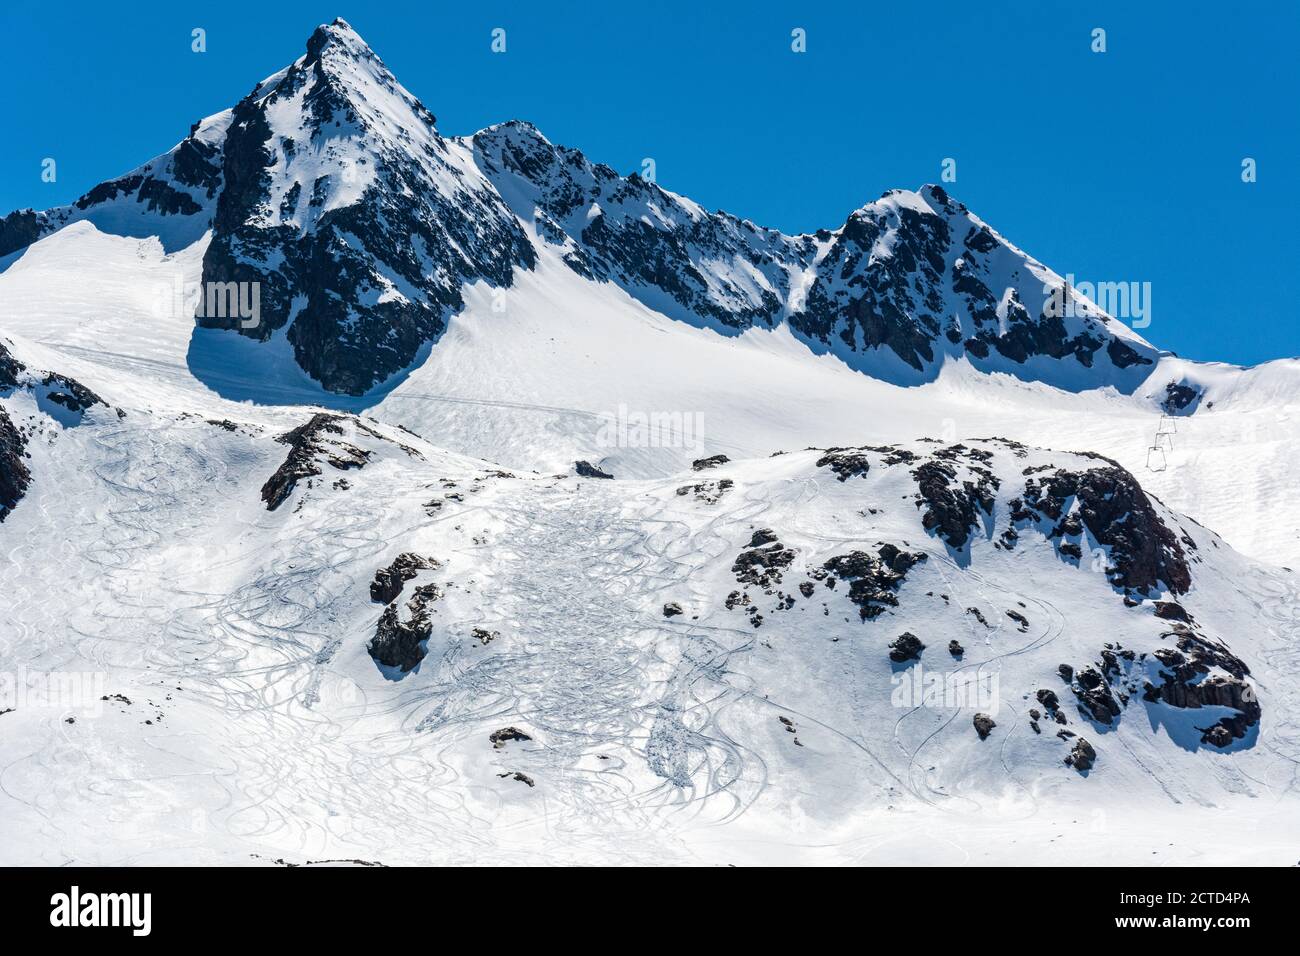 Snowy mountainous landscape in Stubai Glacier area in Tyrol, Austria, with ski area and lifts. Stock Photo